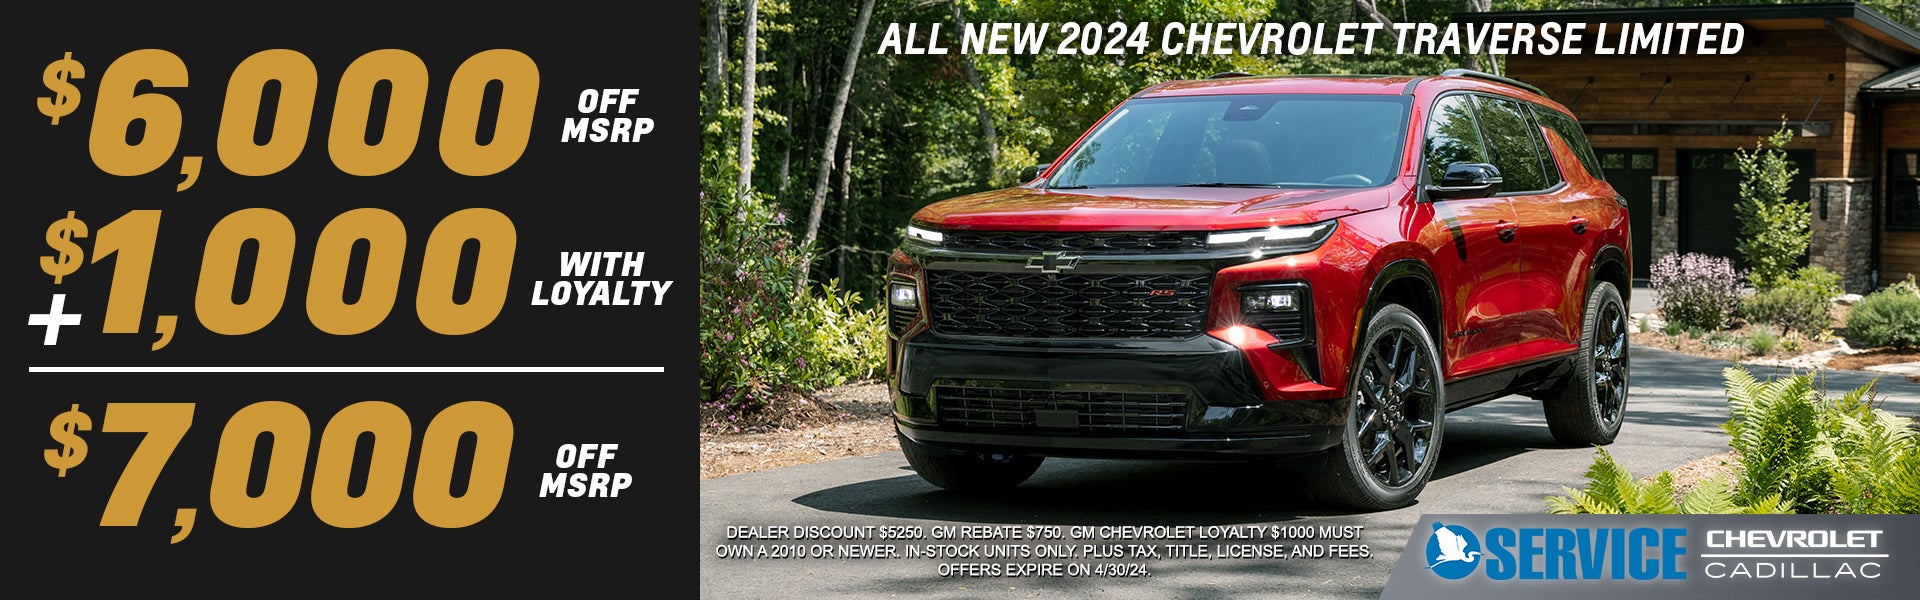 New 2024 Chevrolet Traverse